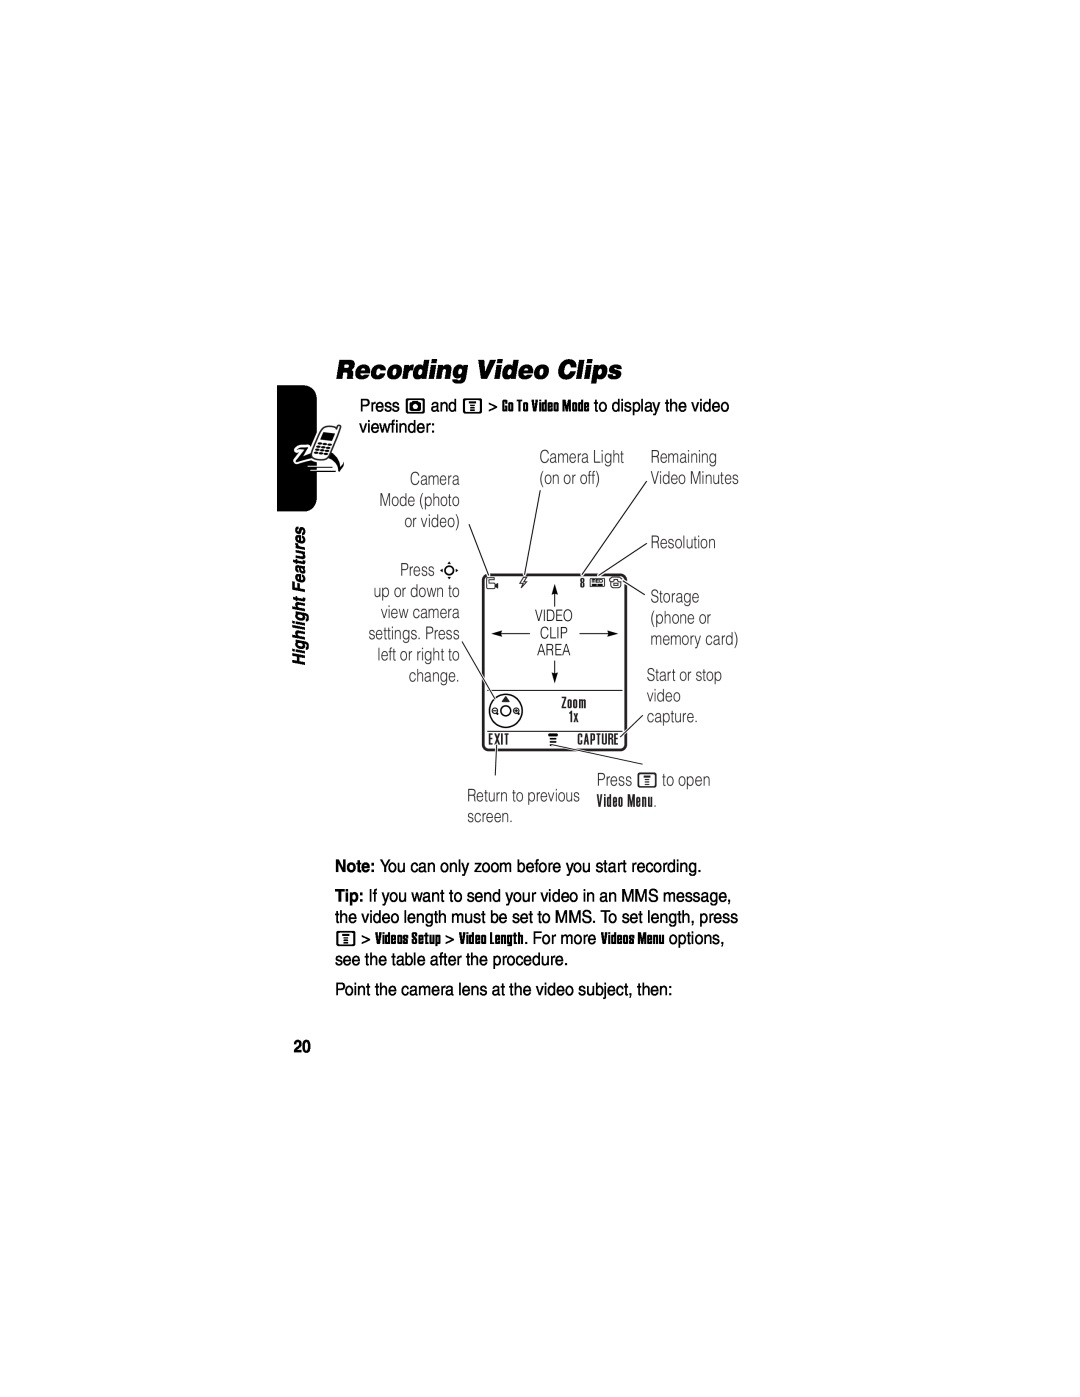 Motorola V635 manual Recording Video Clips, Mode photo, view camera, Area, Start or stop 